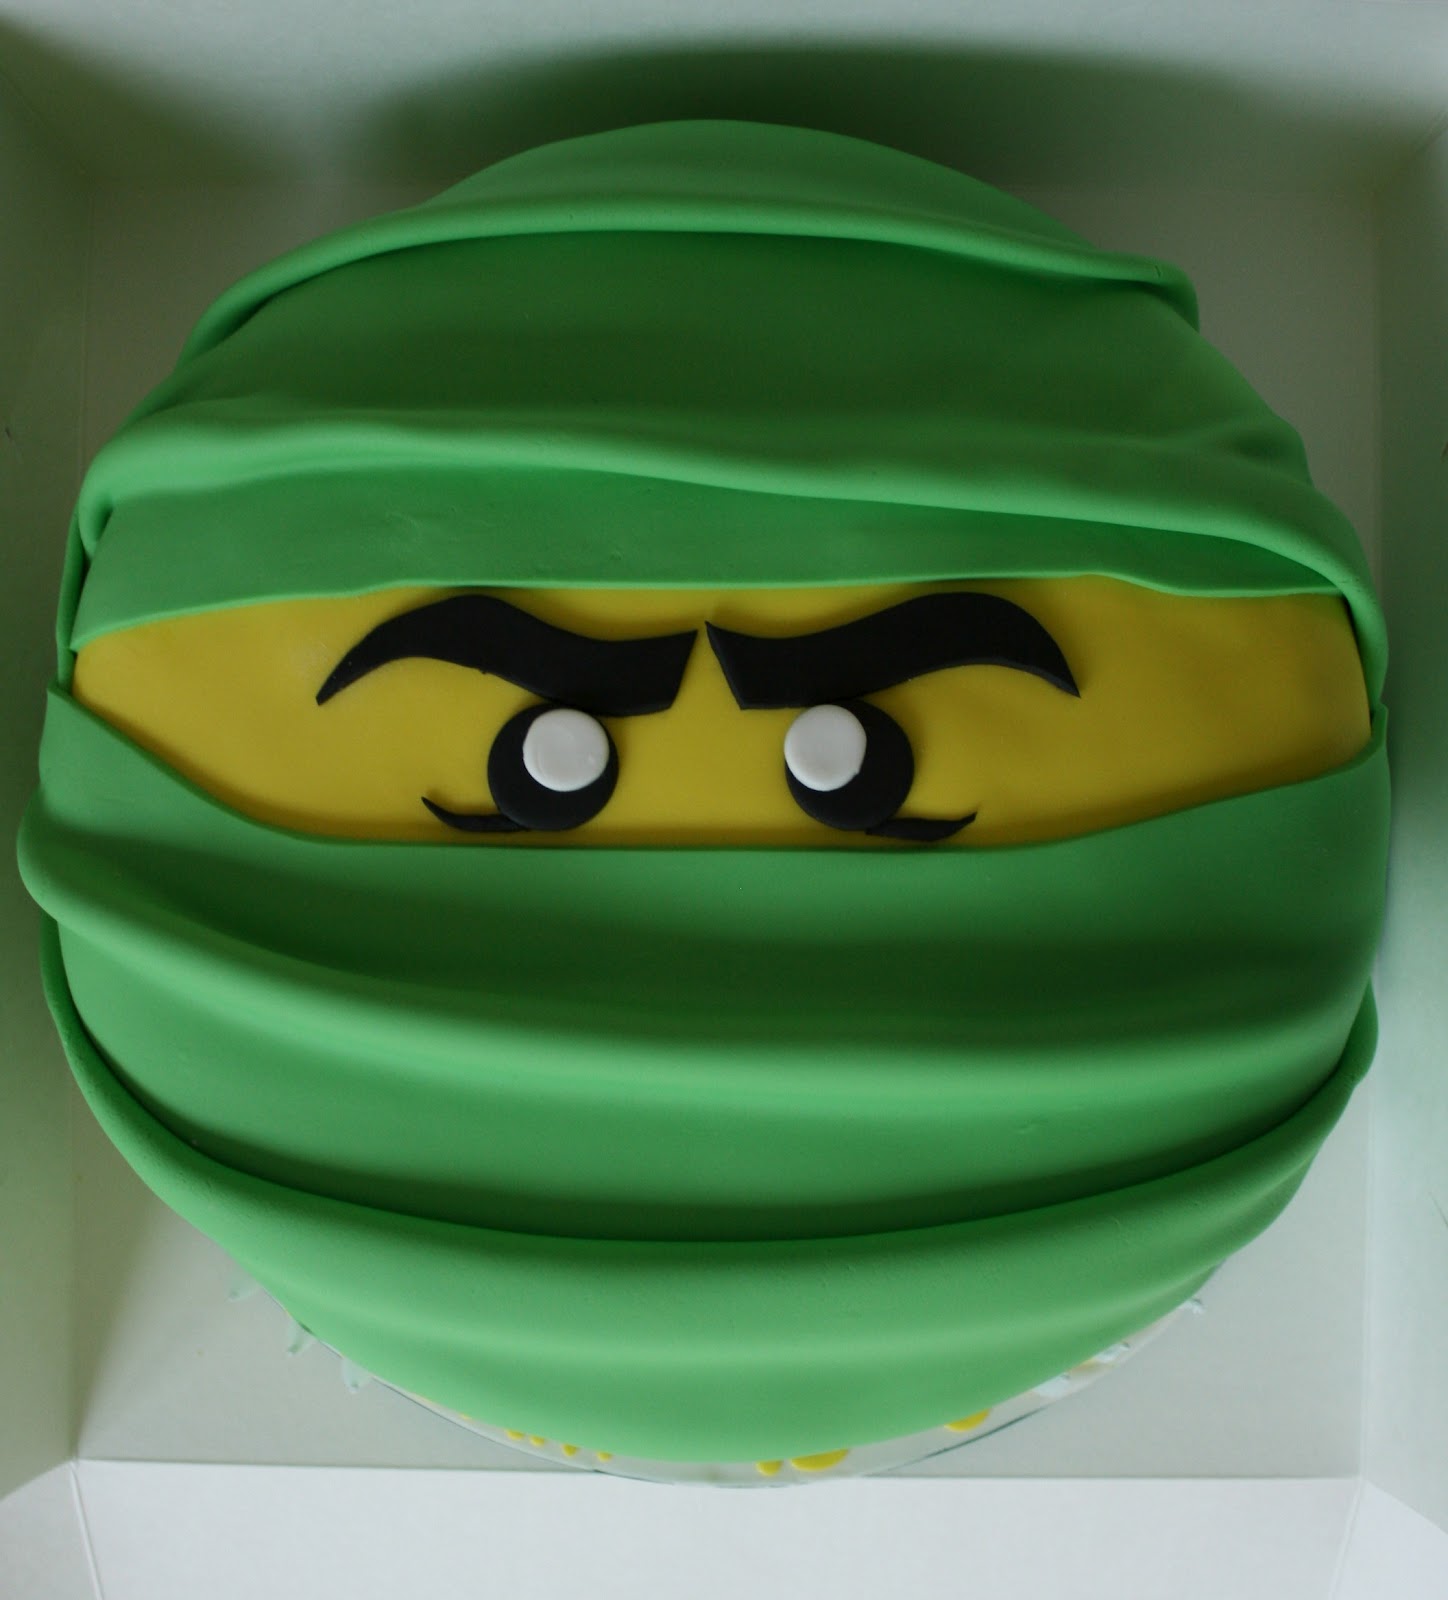 baked-by-design-green-lego-ninja-head-cake